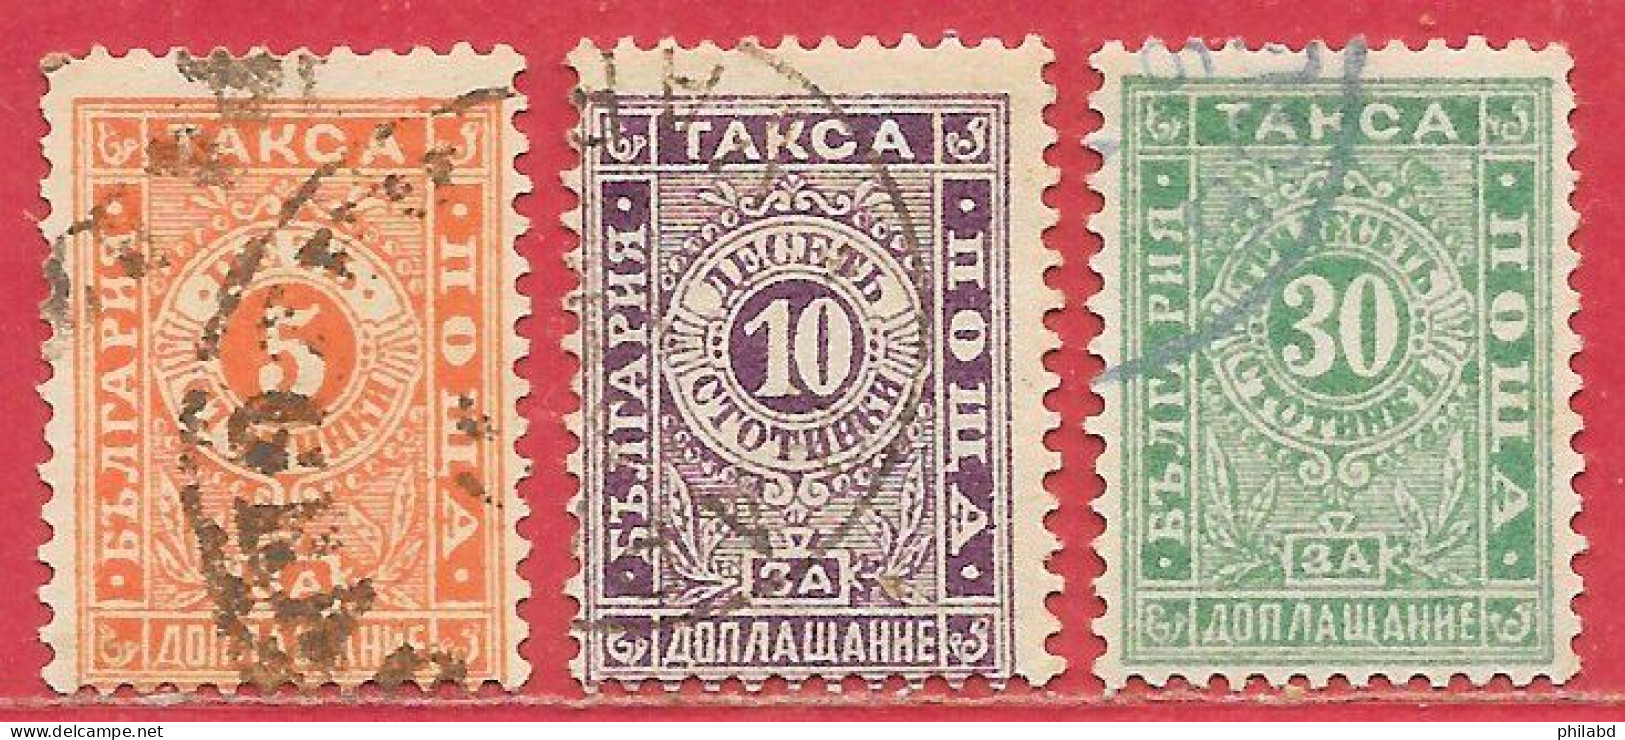 Bulgarie Taxe N°13 à/to 15 1896 O - Impuestos